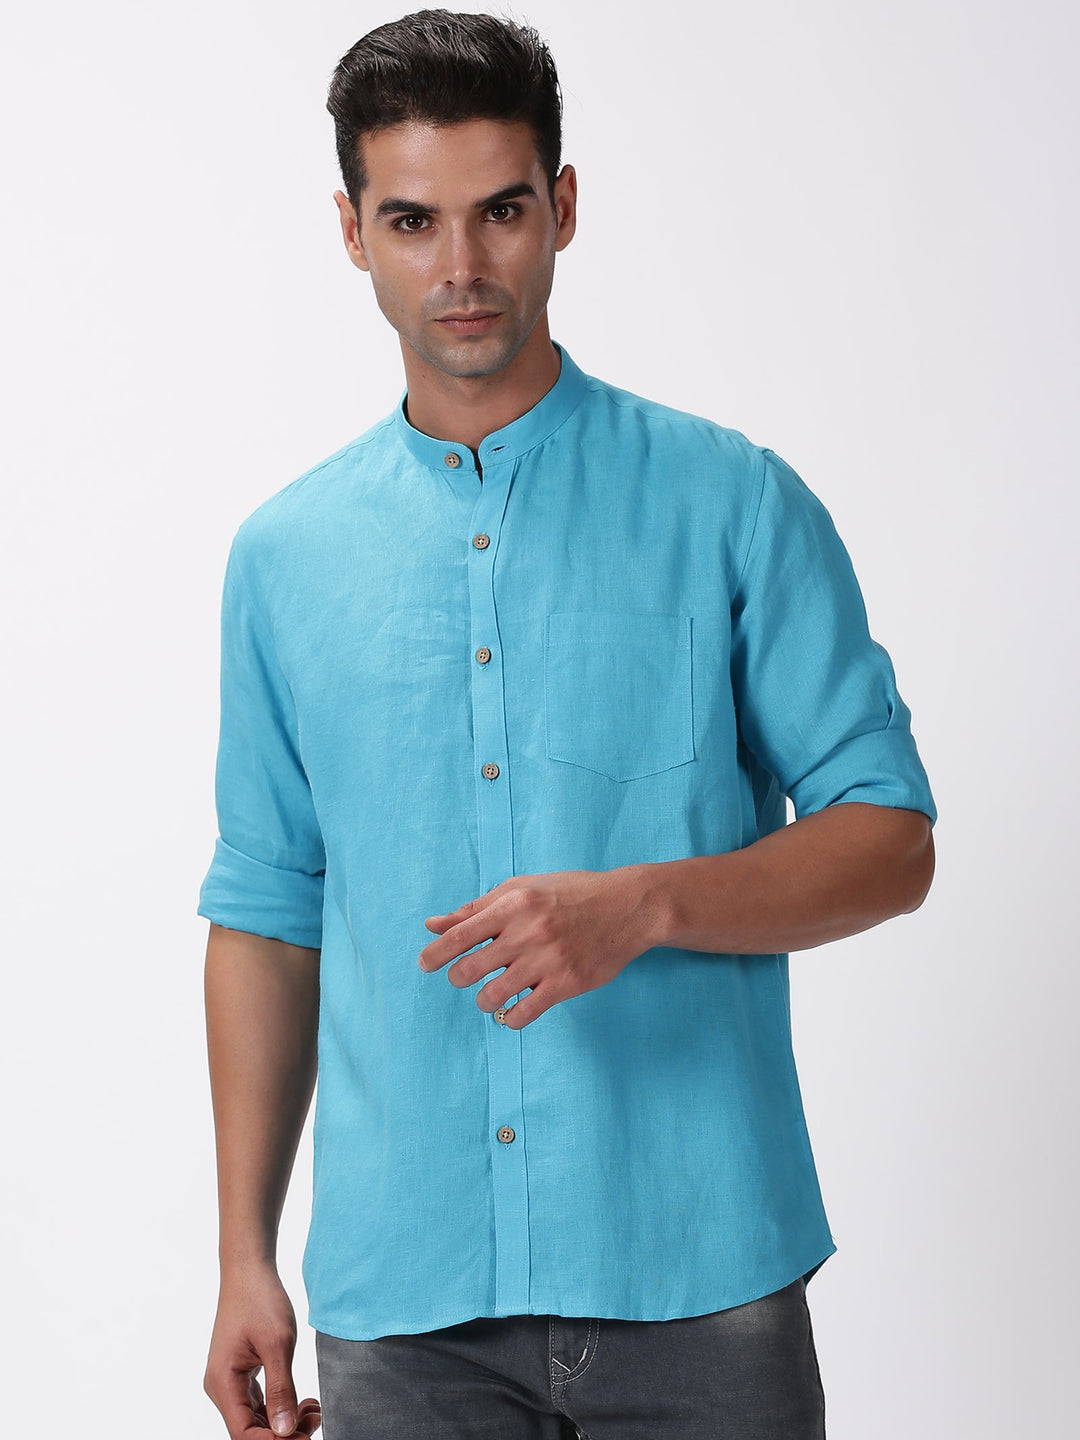 Enzo - Pure Linen Mandarin Collar Full Sleeve Shirt - Aqua Blue | Rescue